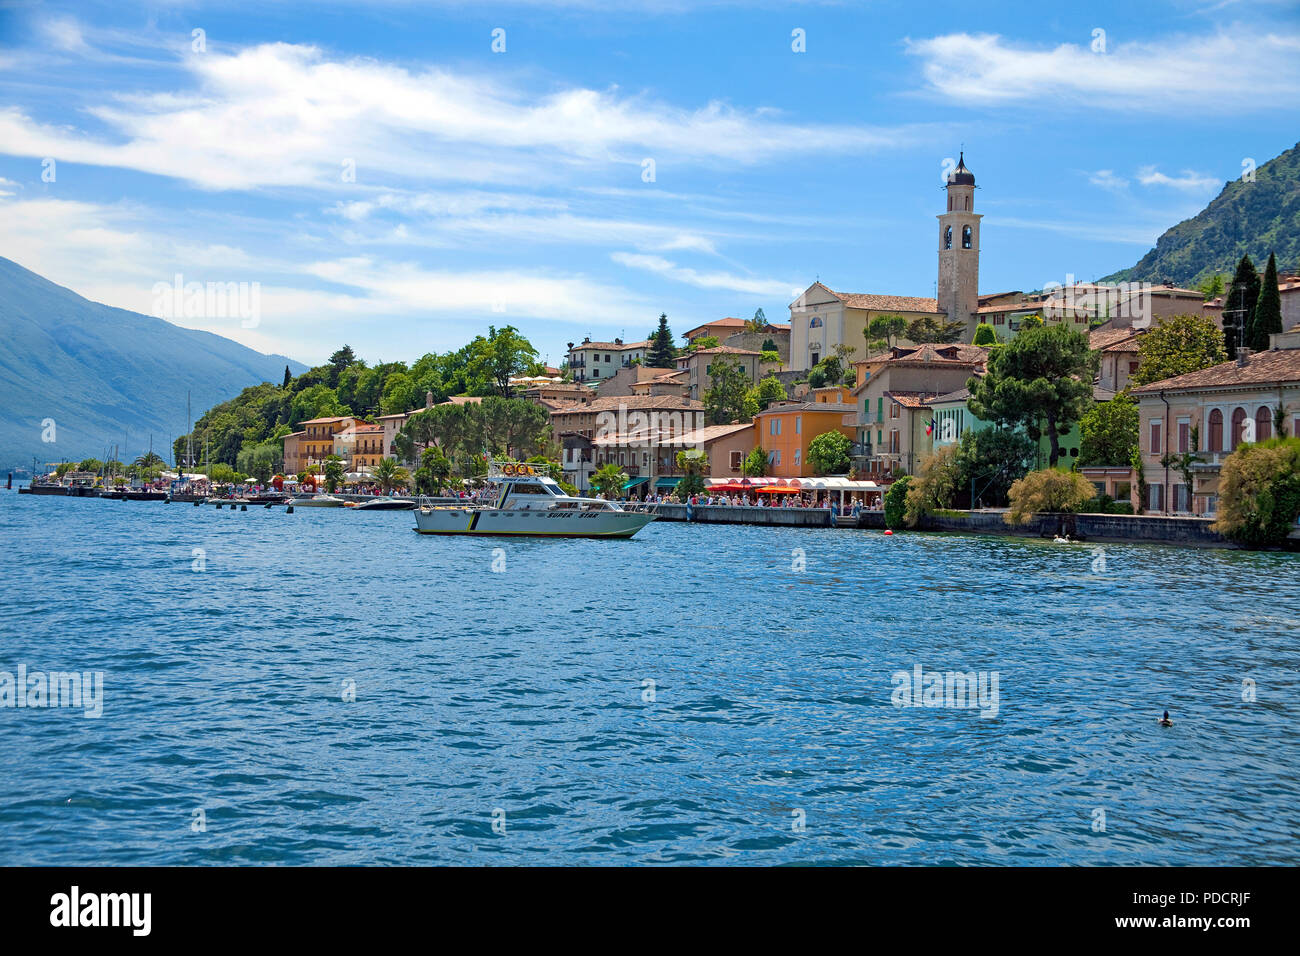 Der Ort Limone, Limone sul Garda, Gardasee, Lombardei, Italien | The town Limone, Limone sul Garda, Lake Garda, Lombardy, Italy Stock Photo